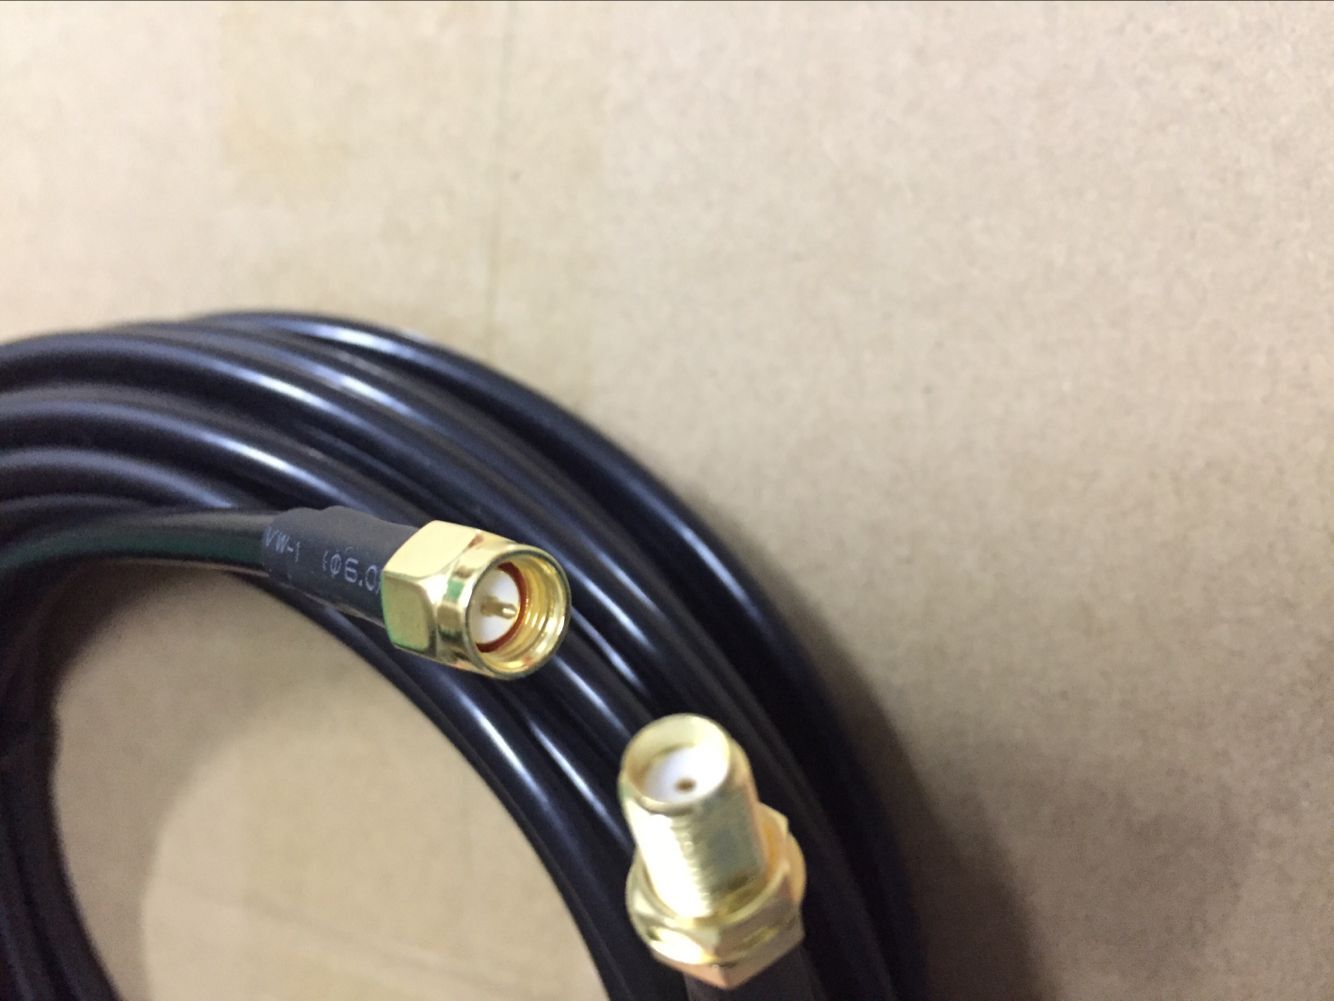  2018/4/20 1000pcs  SMA male--SMA female RF cable ready to ship